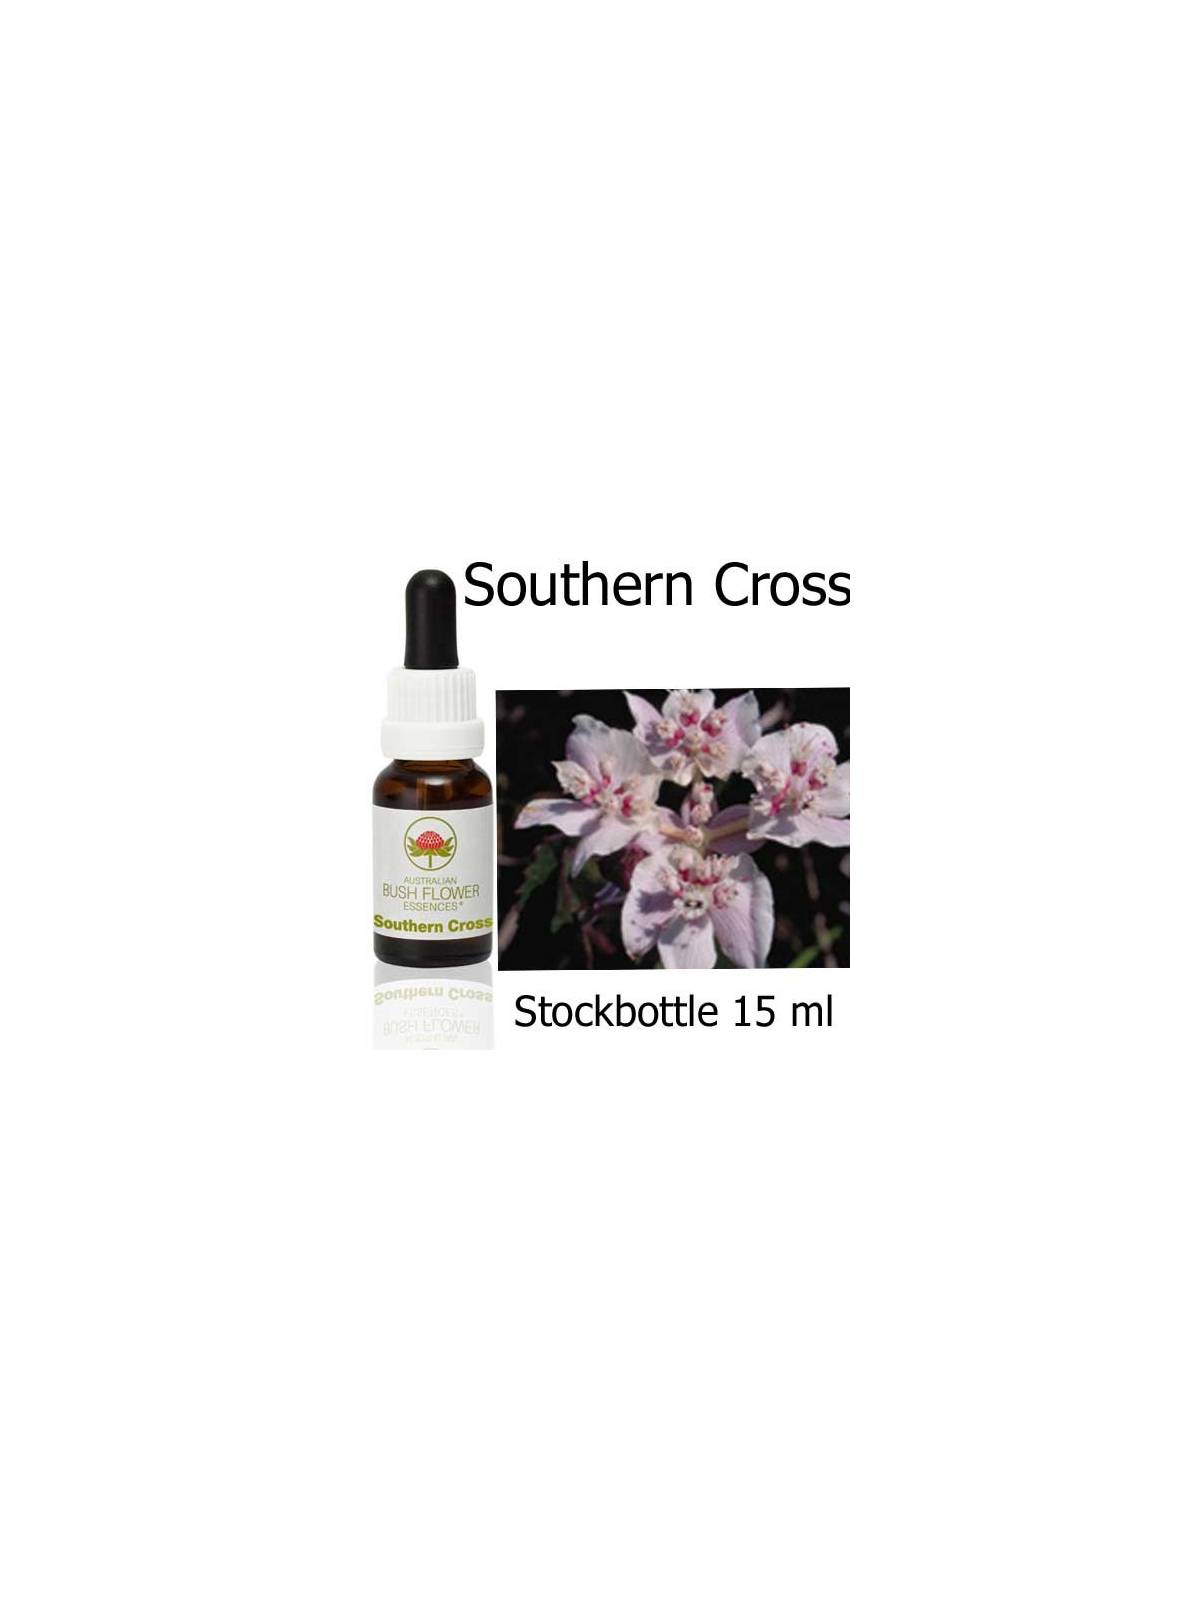 Fiori Australiani Southern Cross Australian Bush Flower Essences stockbottles